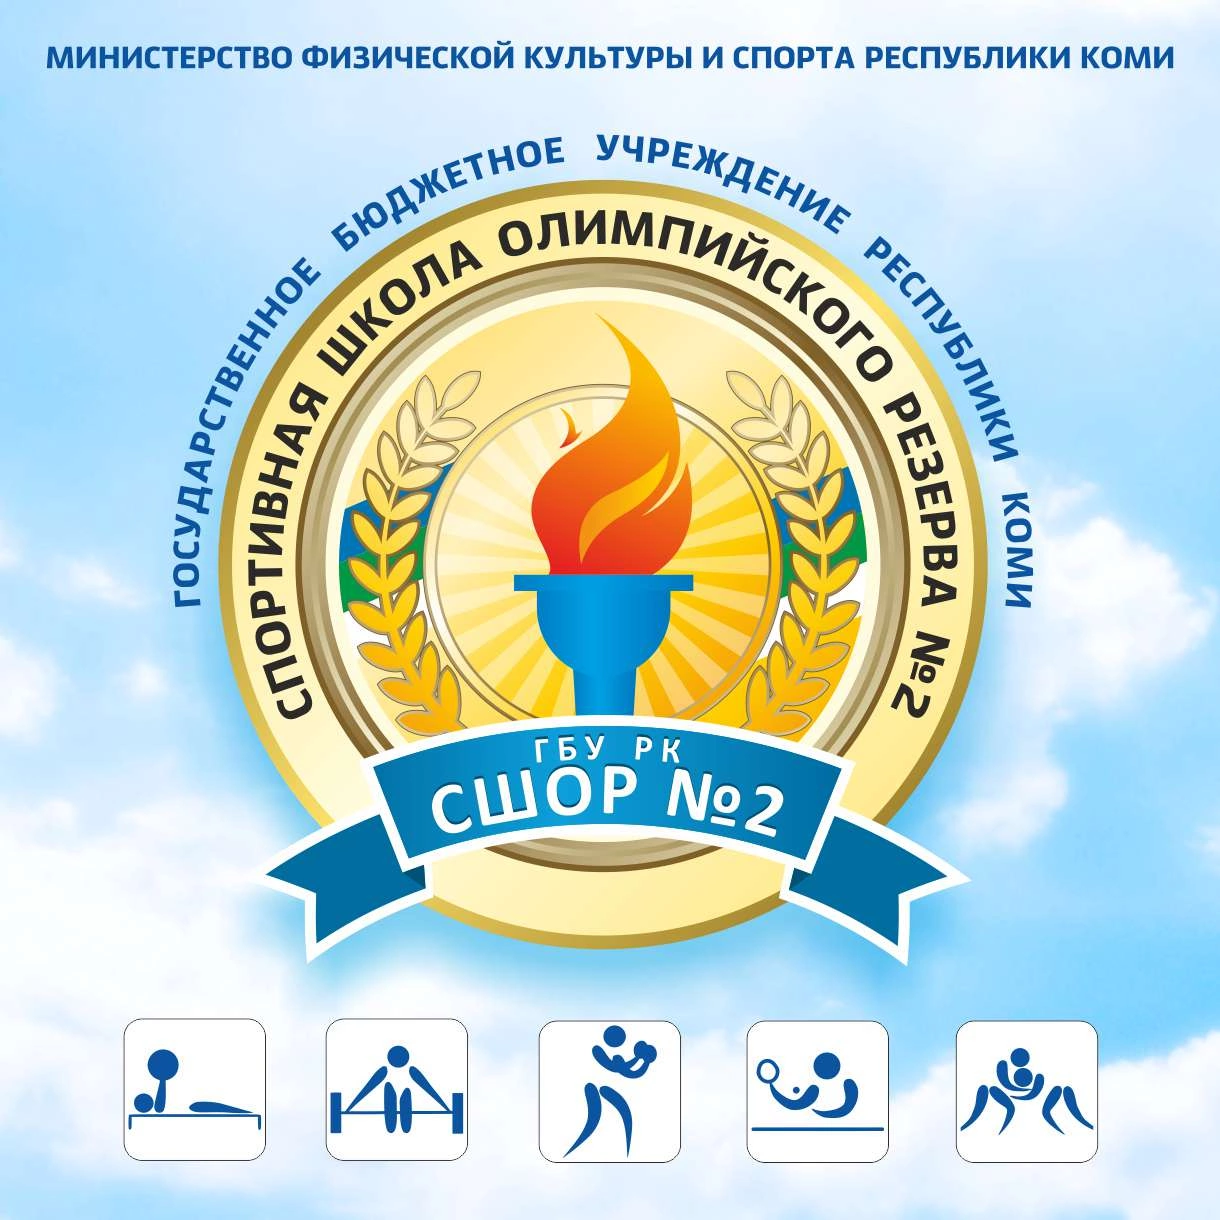 ГБУ РК СШОР 2 logo